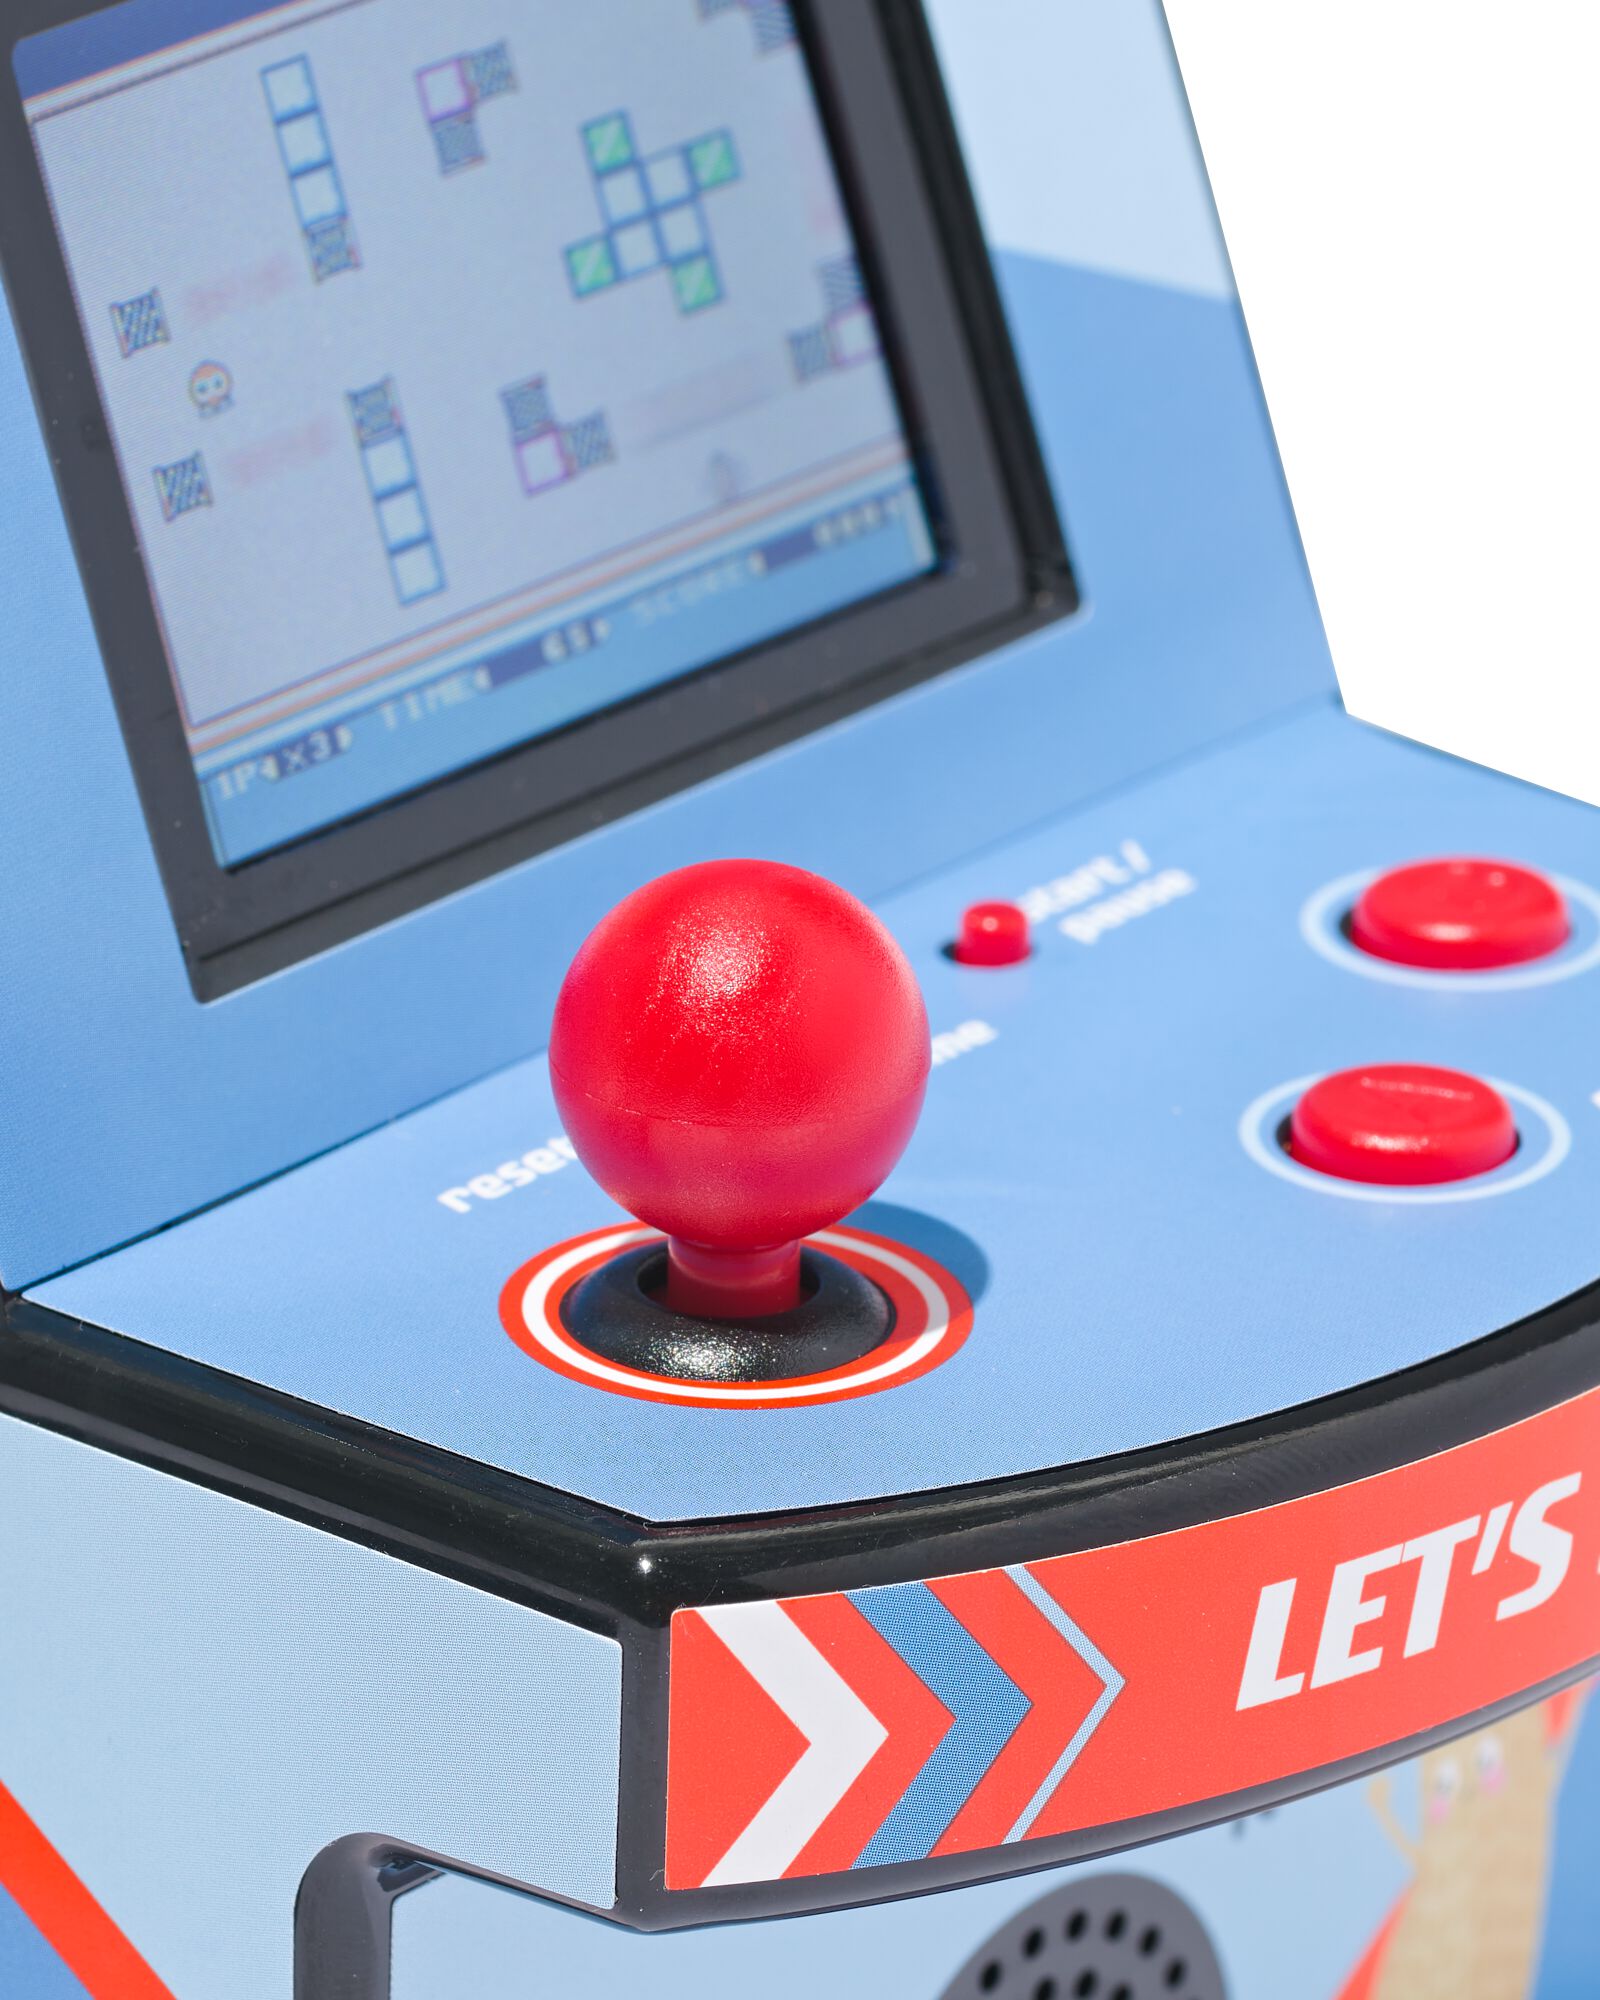 arcade game - 39660002 - HEMA